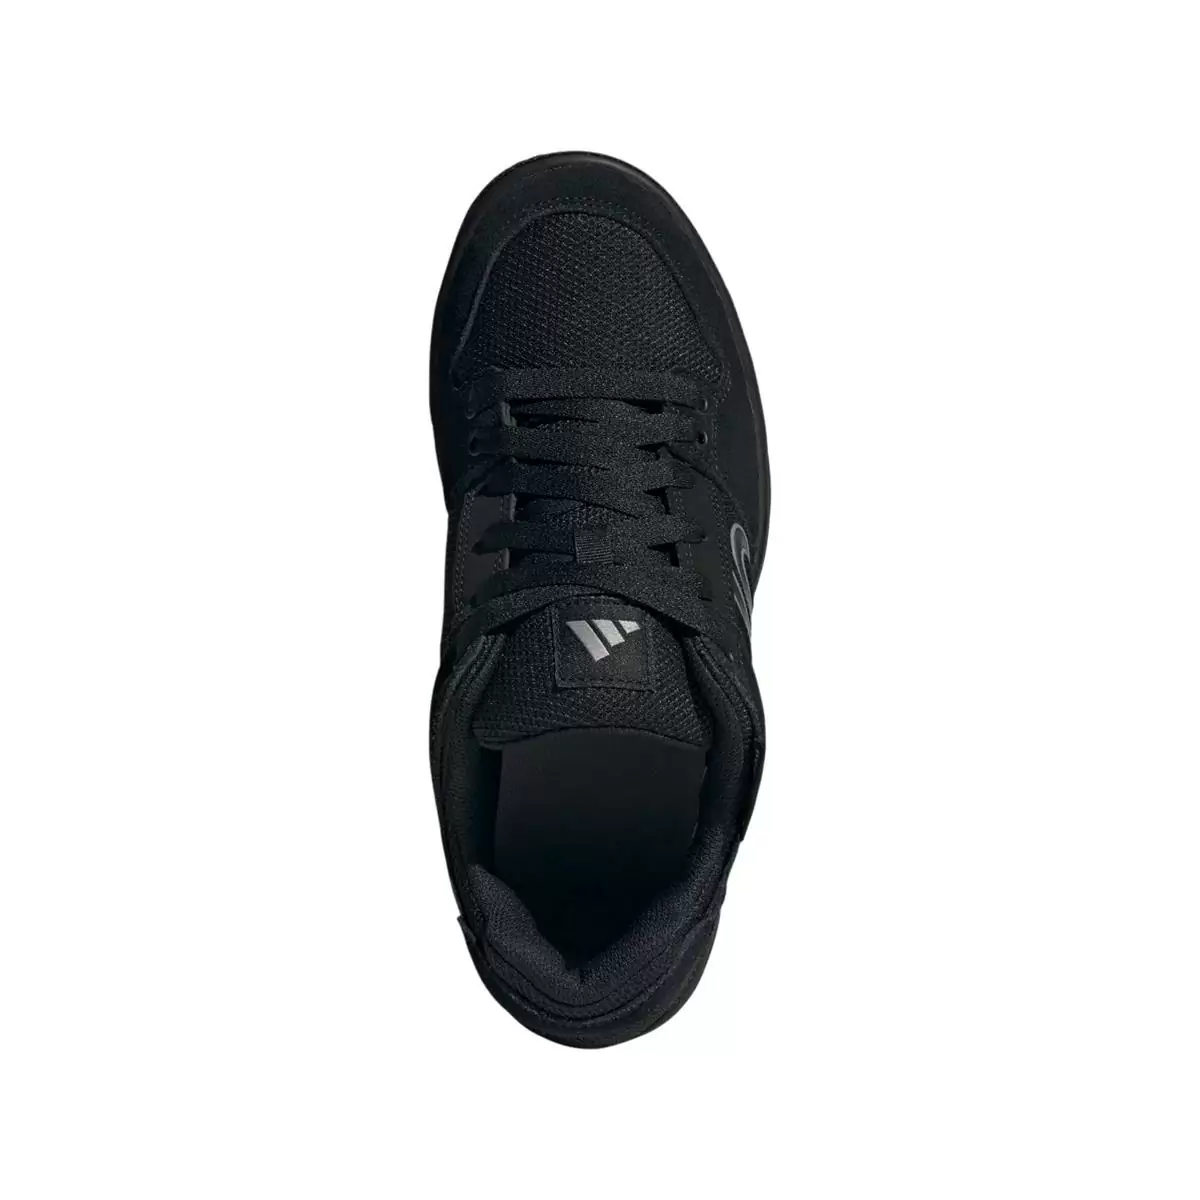 MTB Shoes Flat Freerider Black Size 44 #1